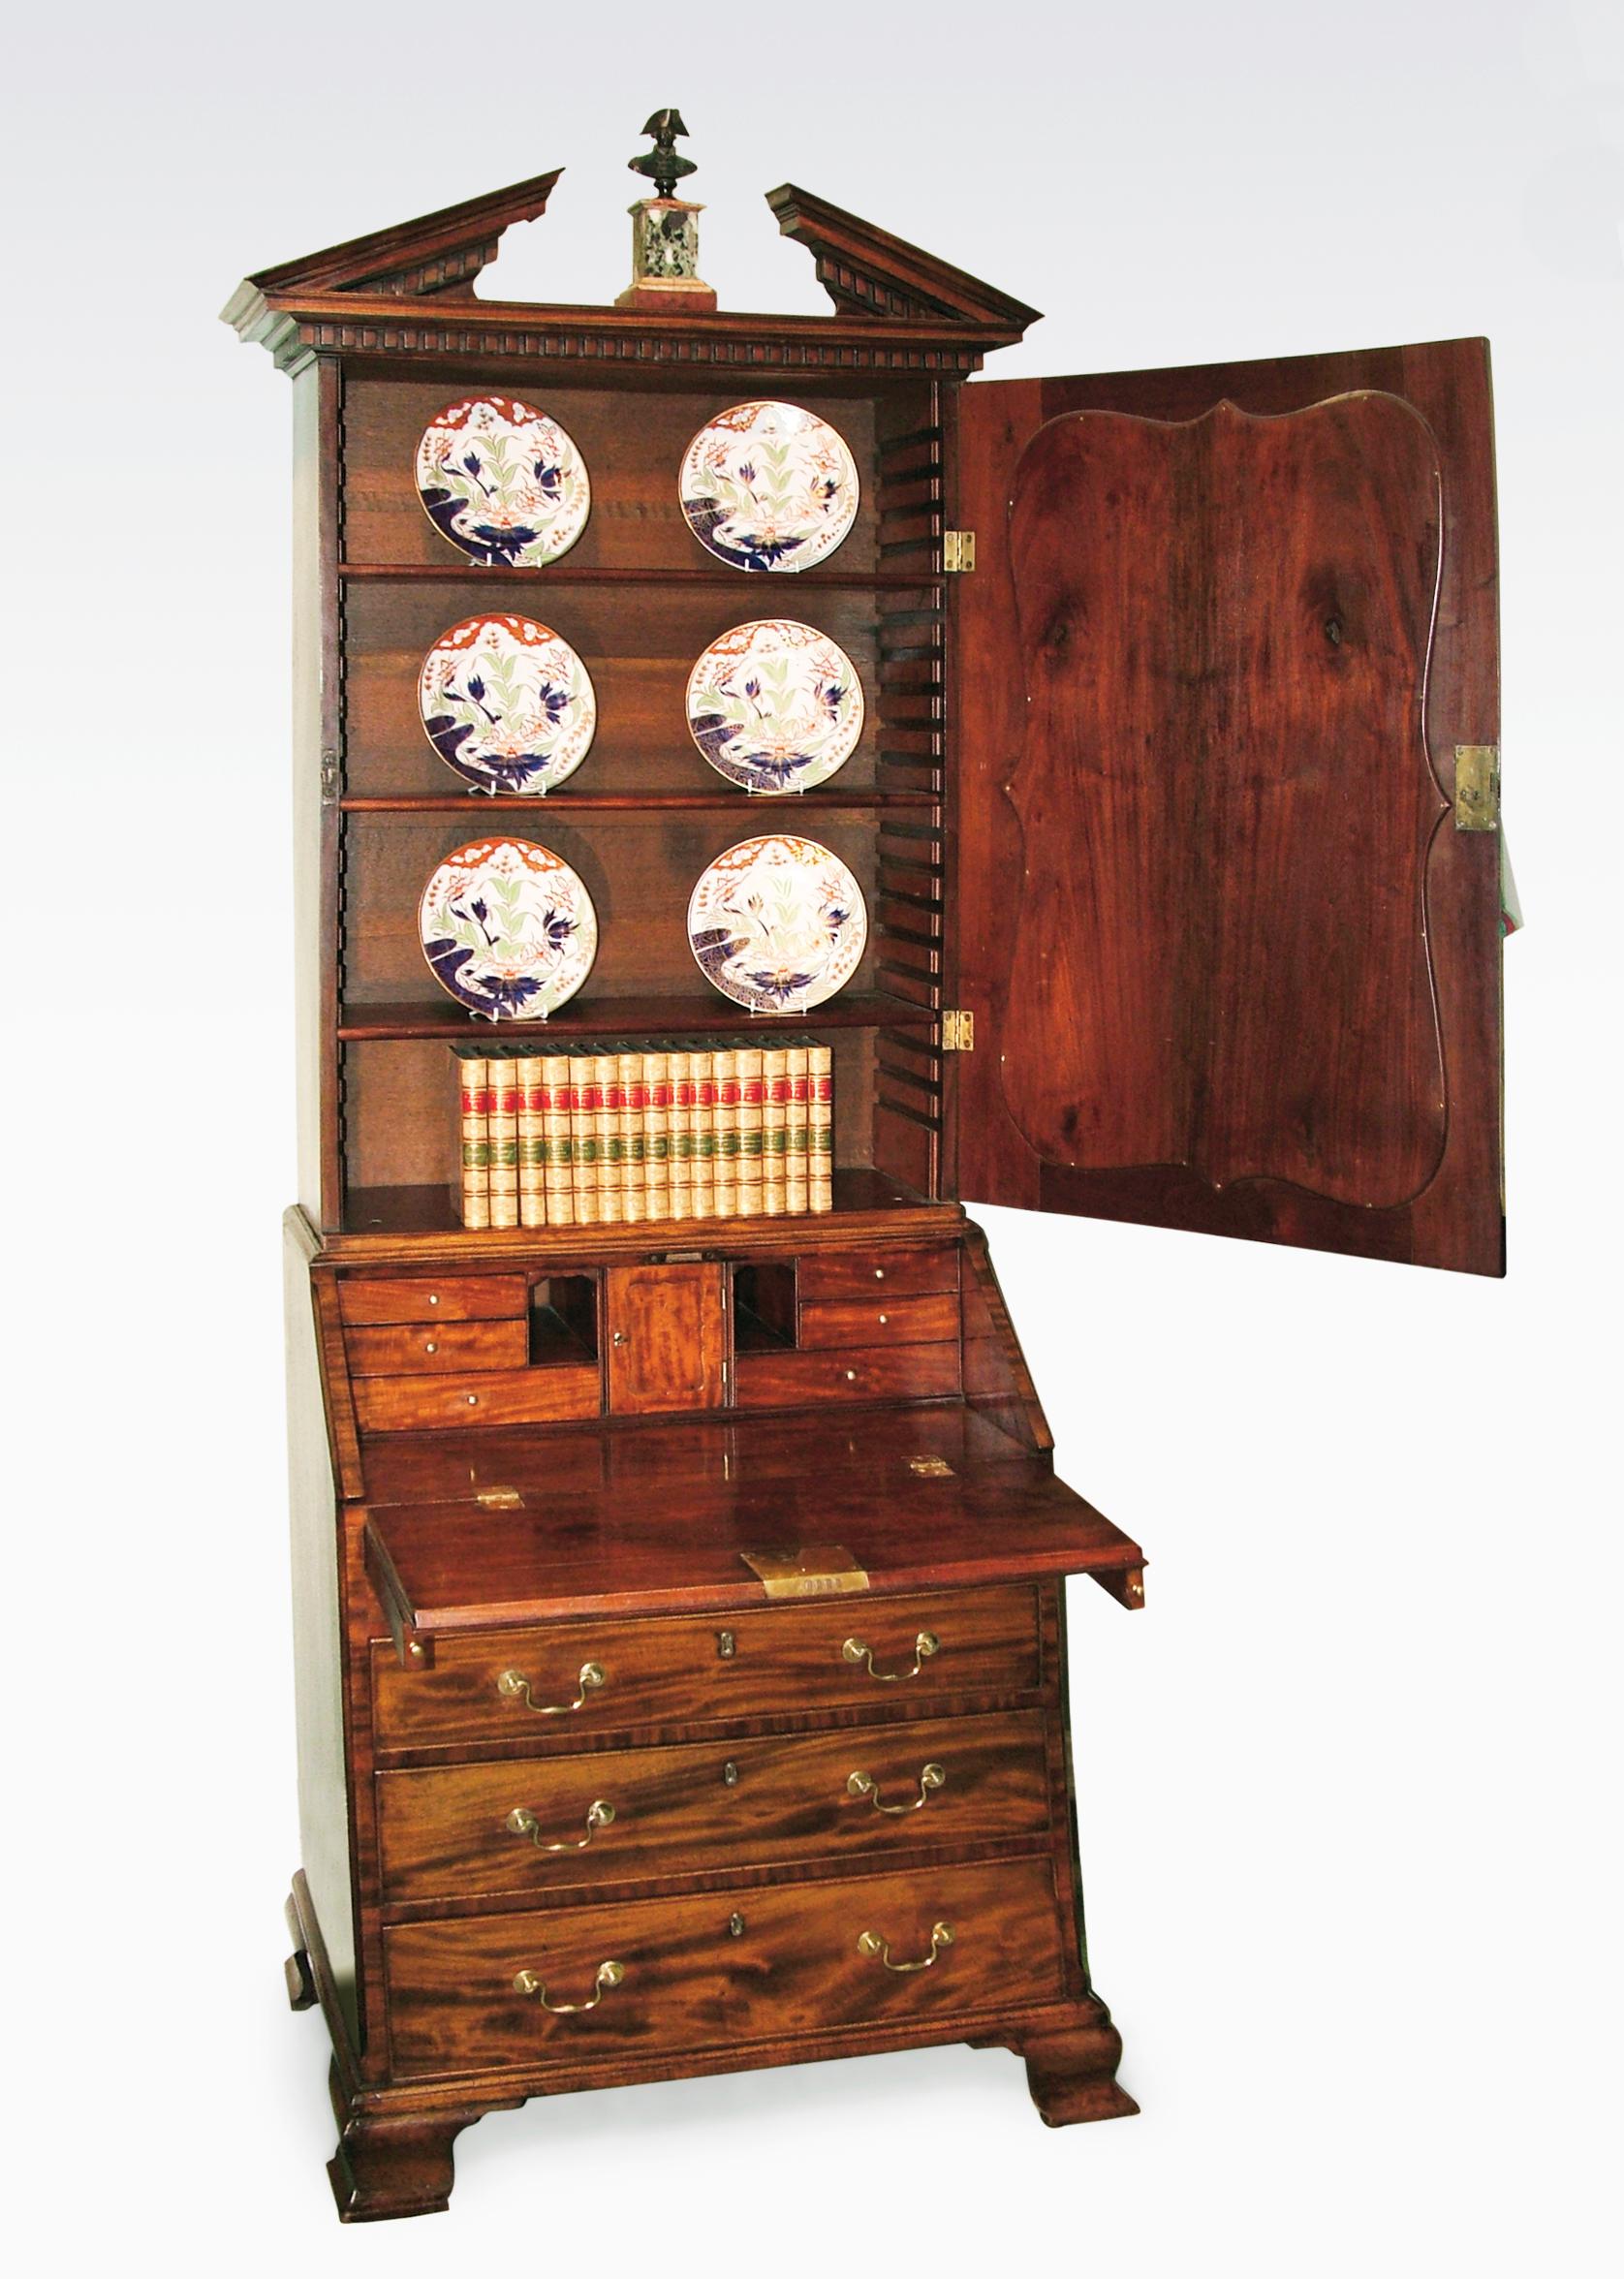 English Mid-18th Century Mahogany Small Bureau Bookcase For Sale